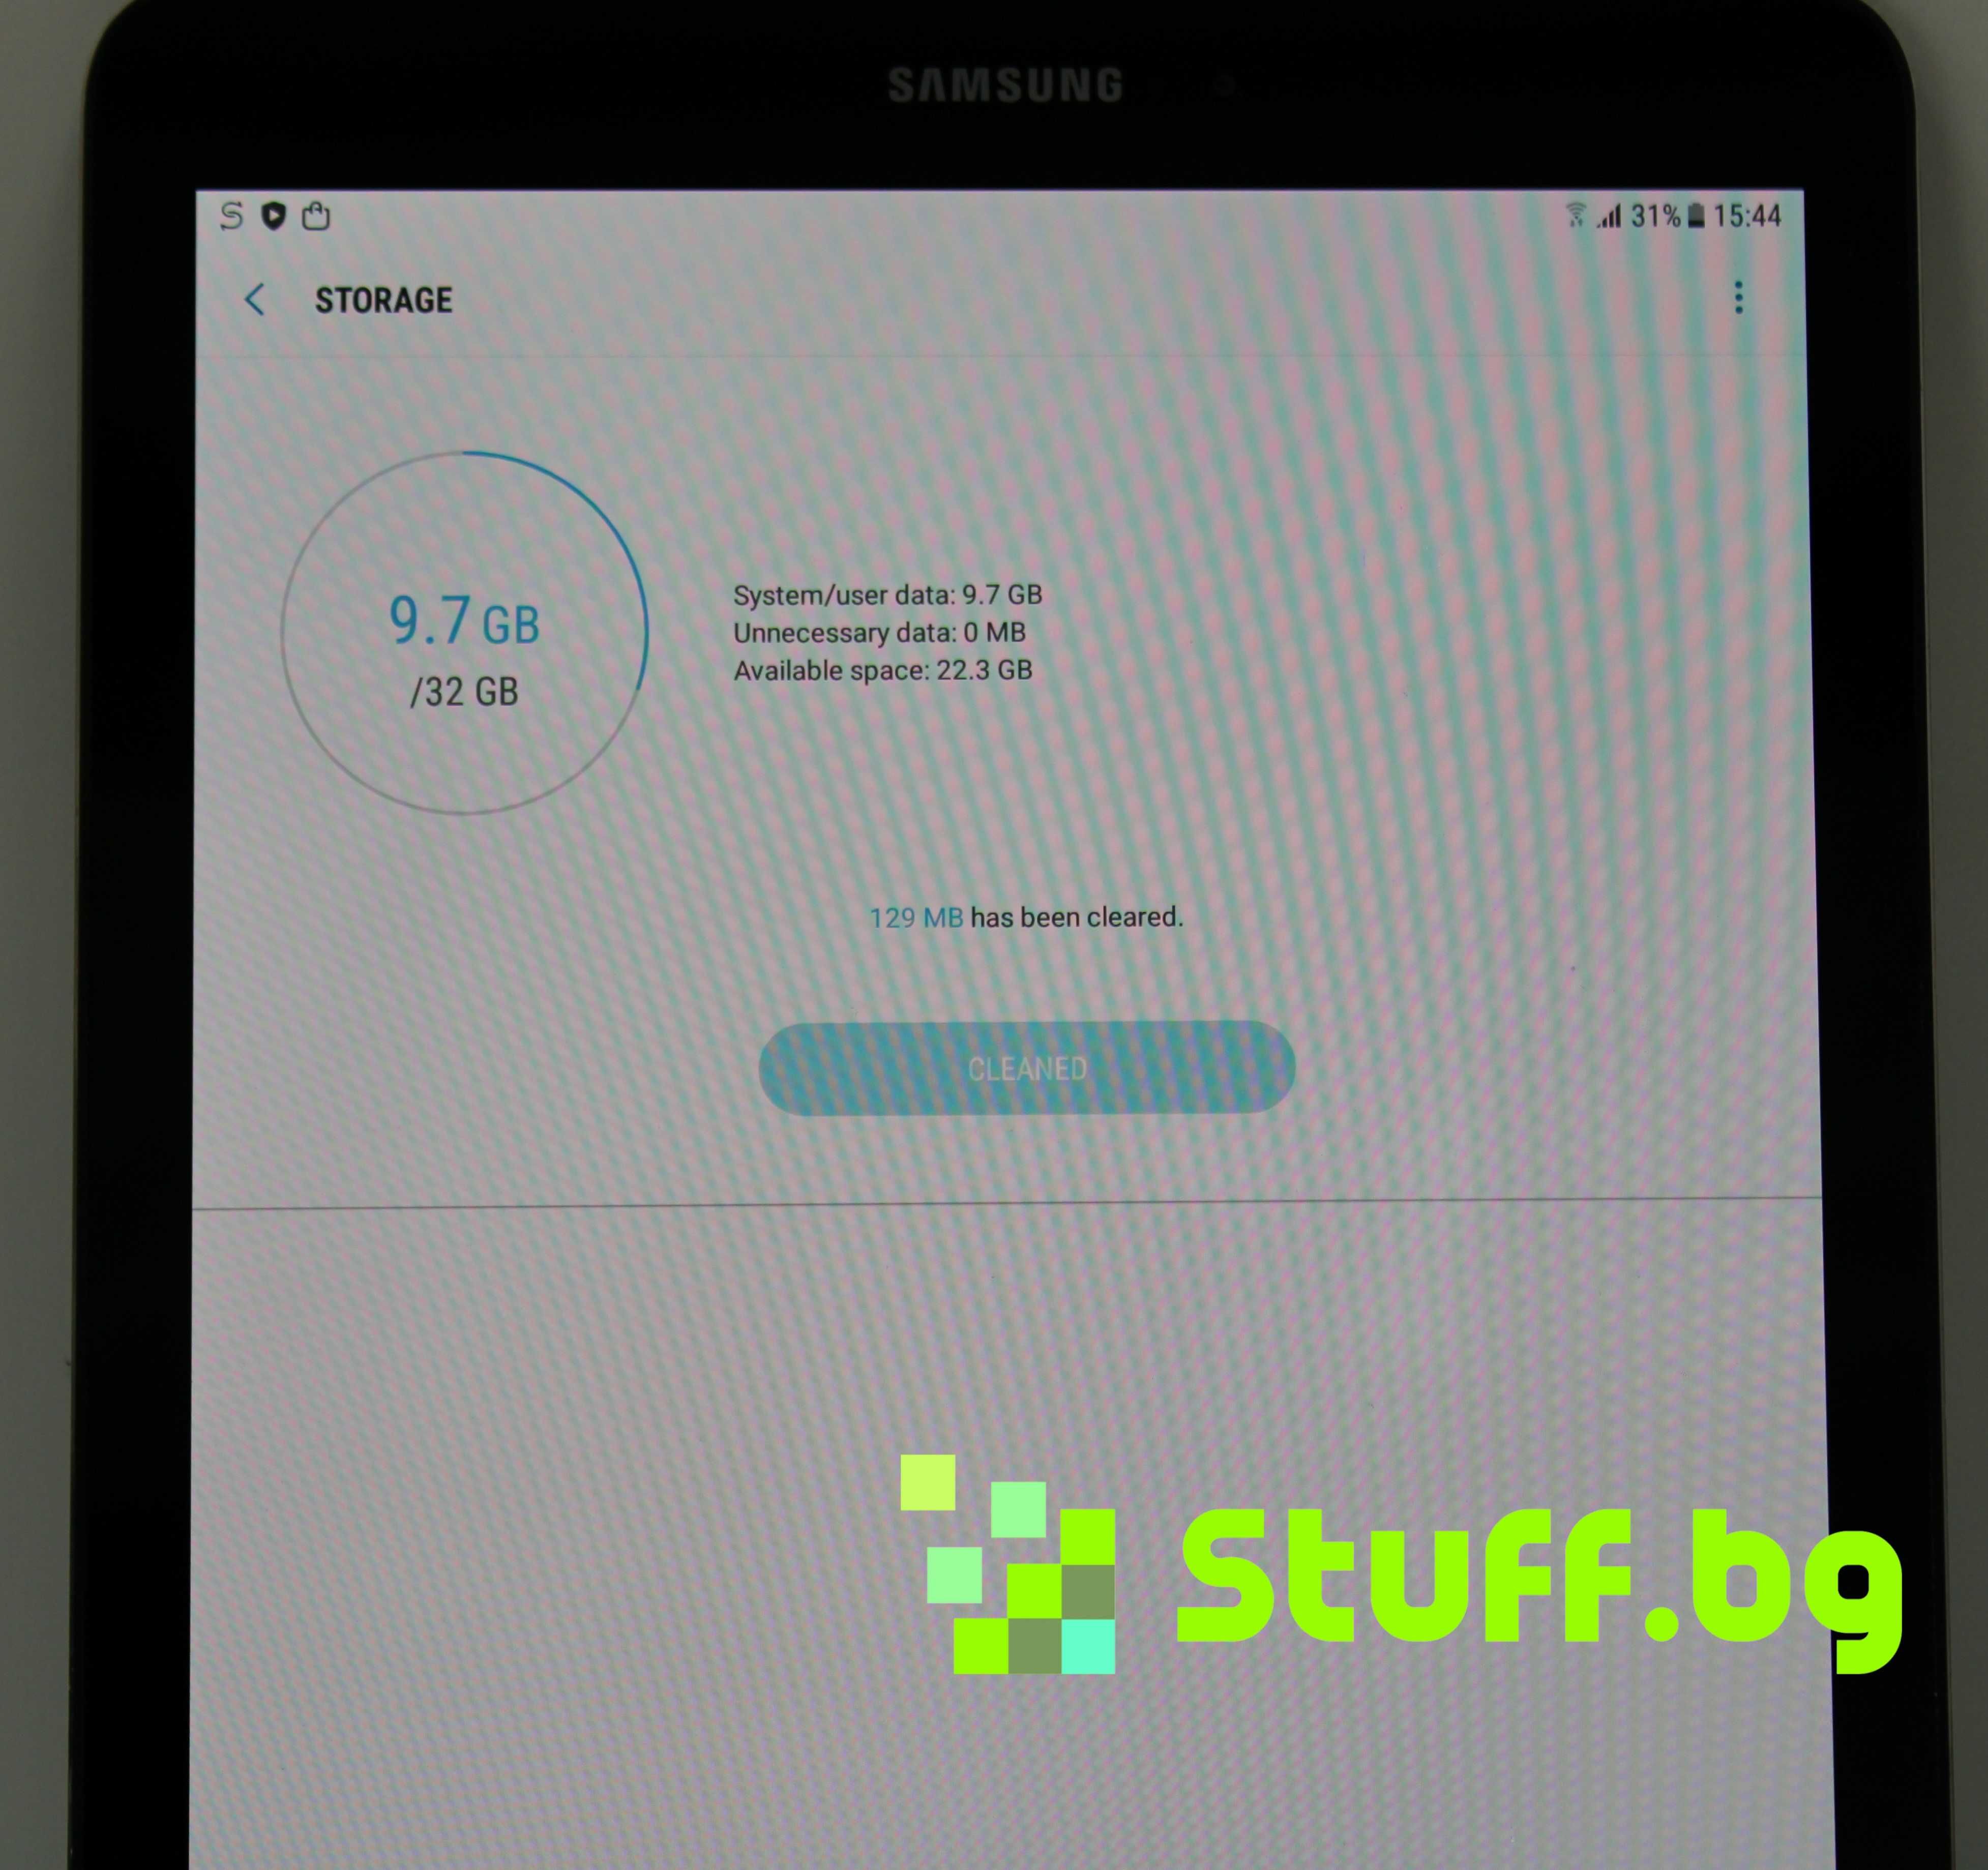 Таблет Samsung T819 Galaxy Tab S2 9.7 LTE 32GB